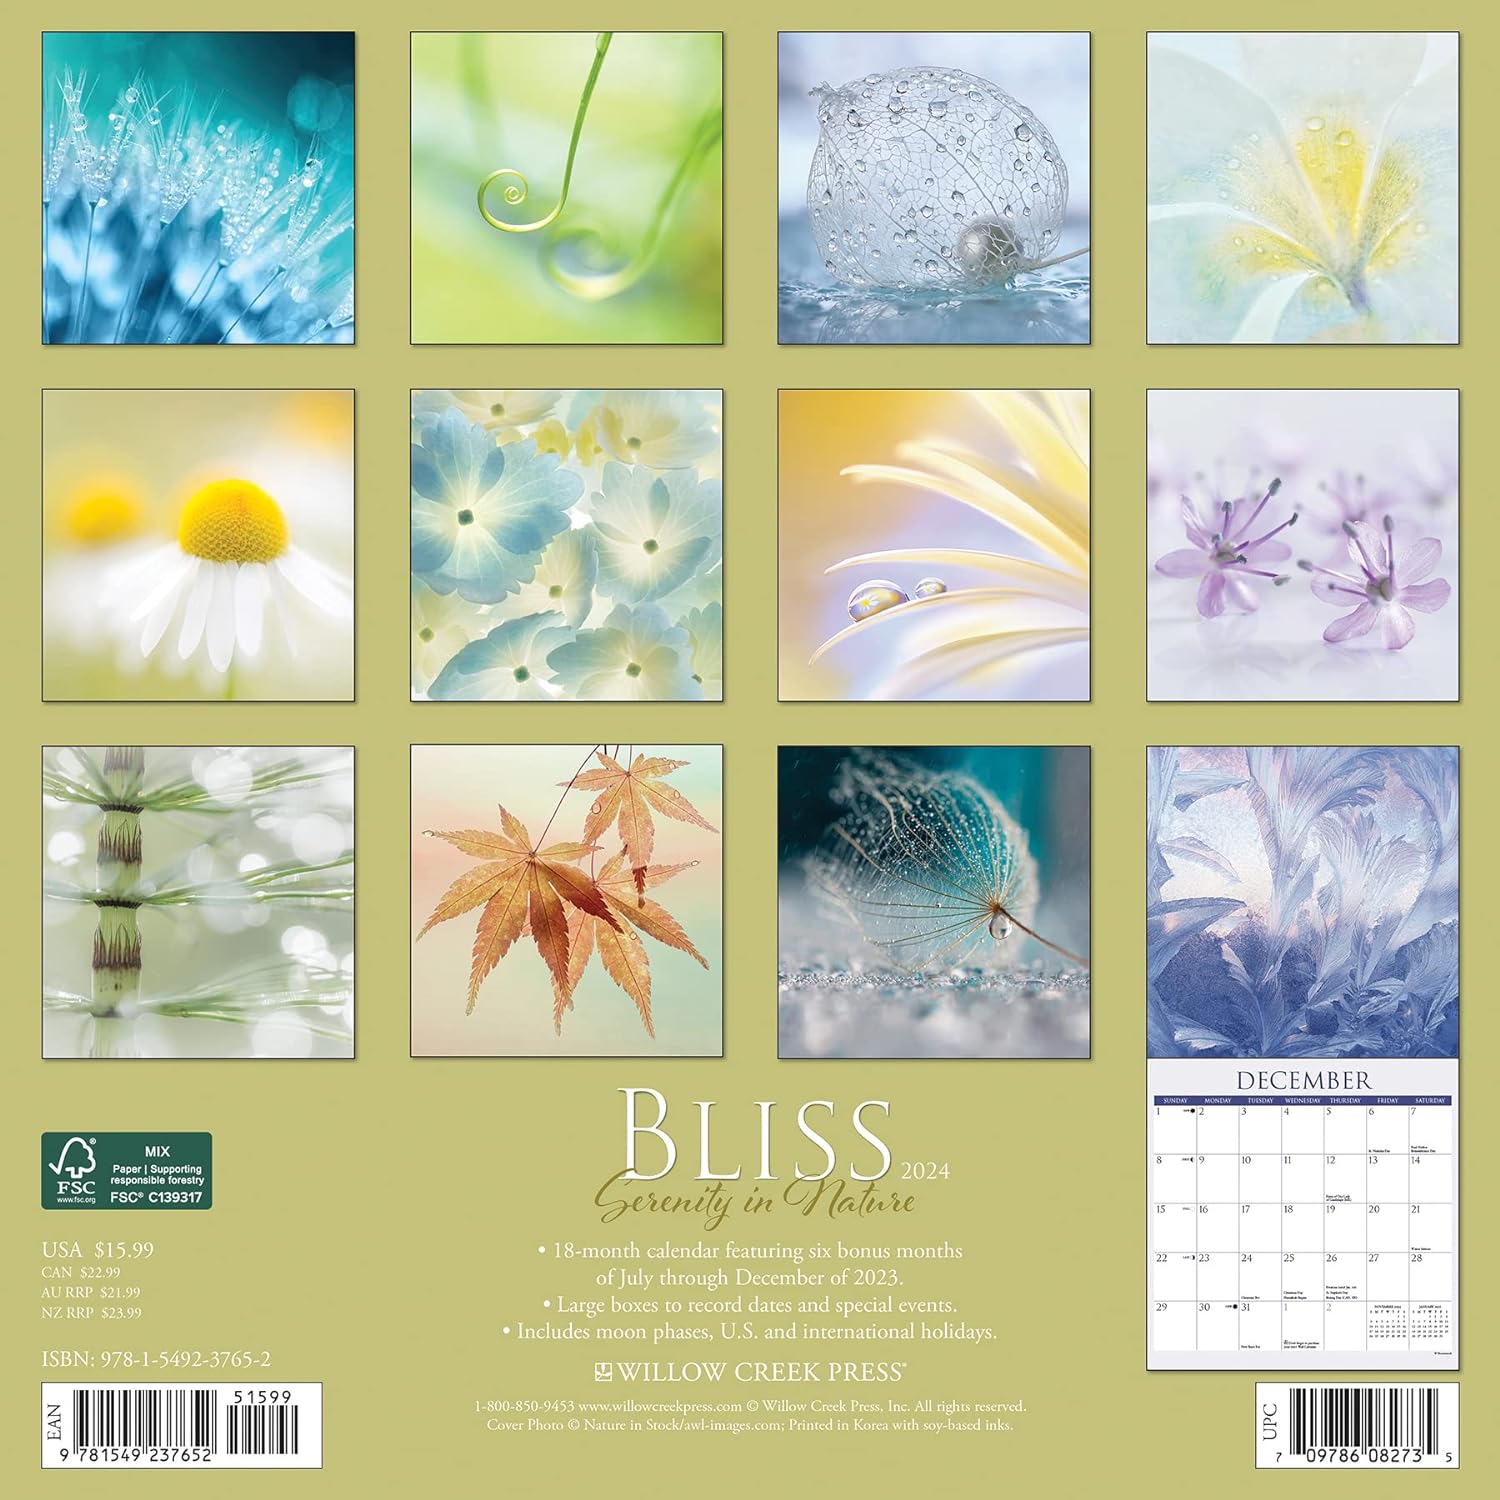 bliss-serenity-in-nature-2024-calendar